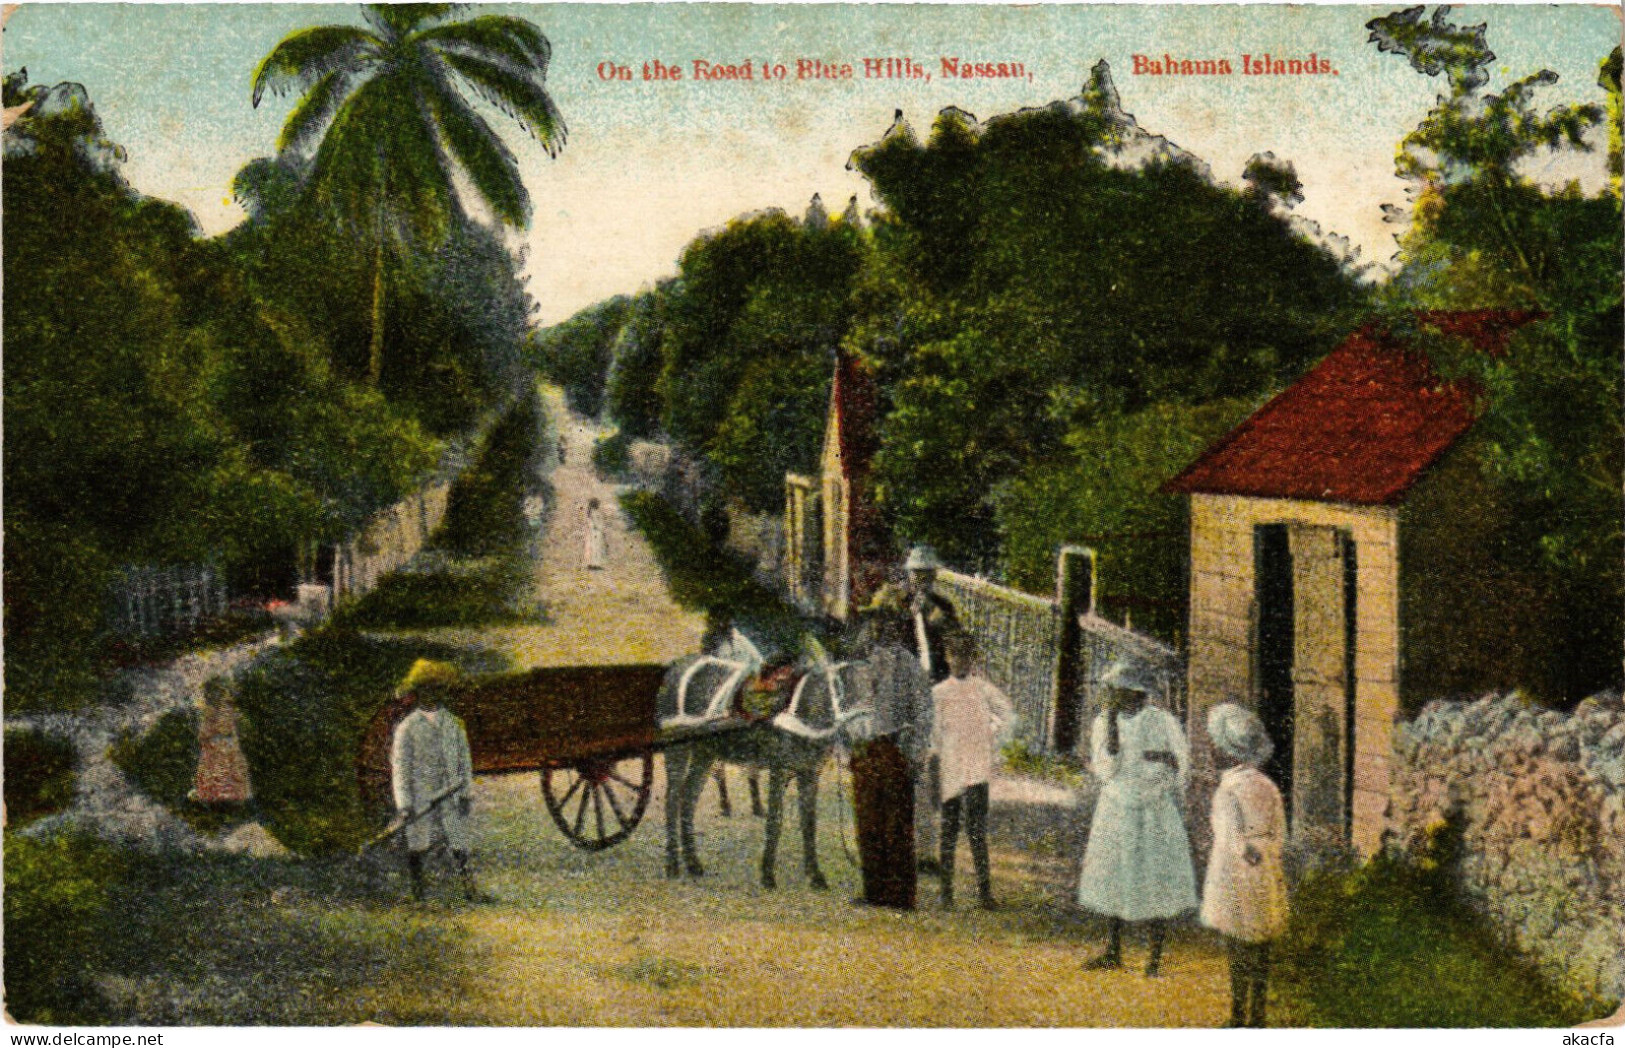 PC BAHAMAS CARIBBEAN NASSAU ON THE ROAD TO BLUE HILLS Vintage Postcard (b52218) - Bahamas